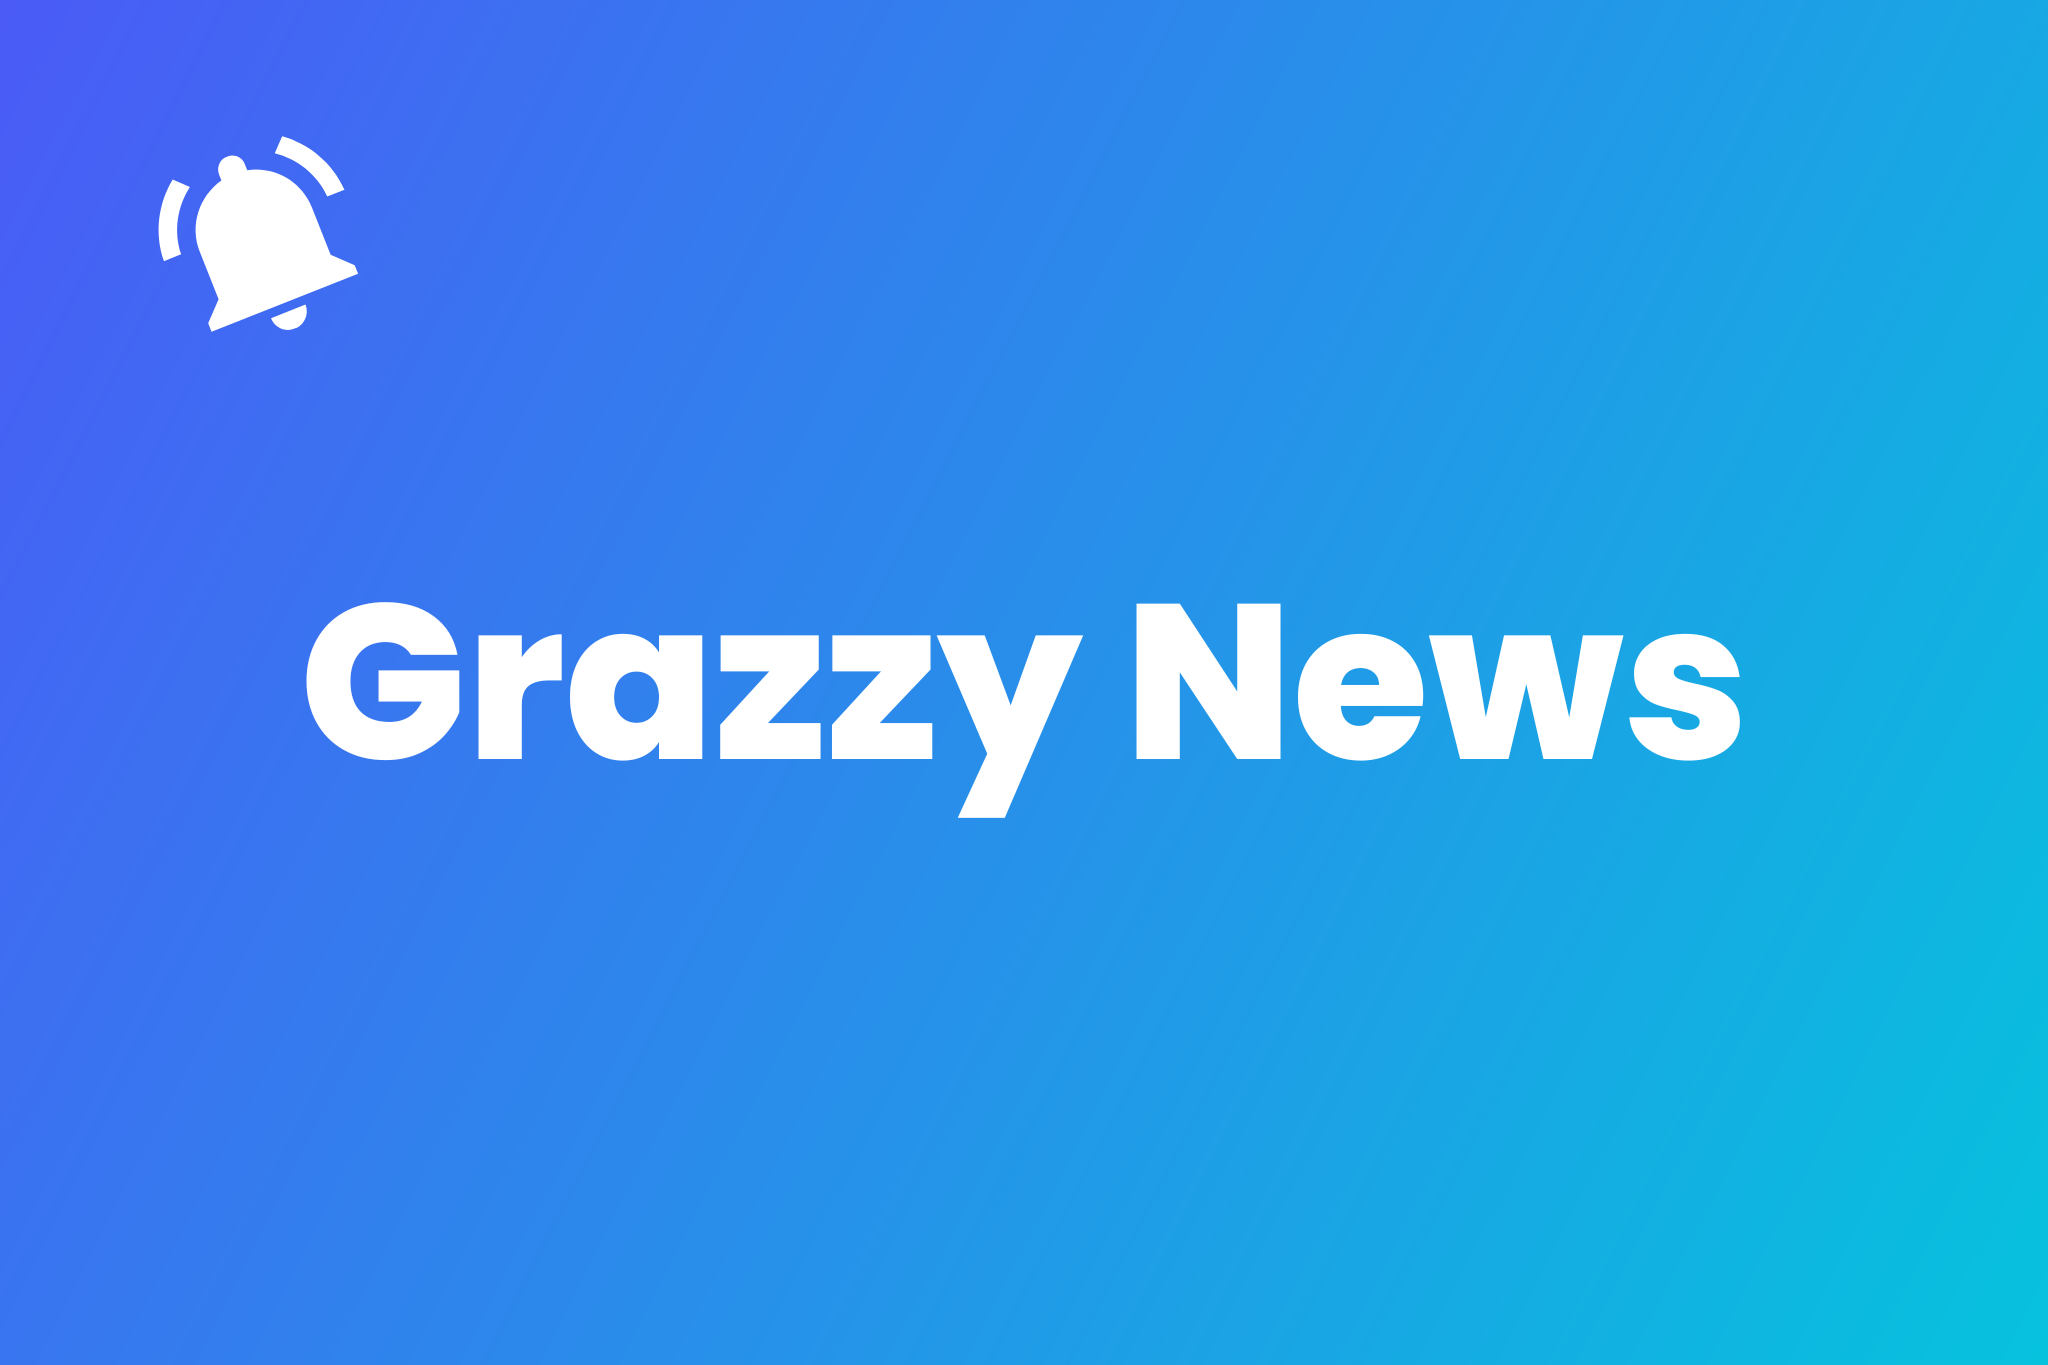 Grazzy News